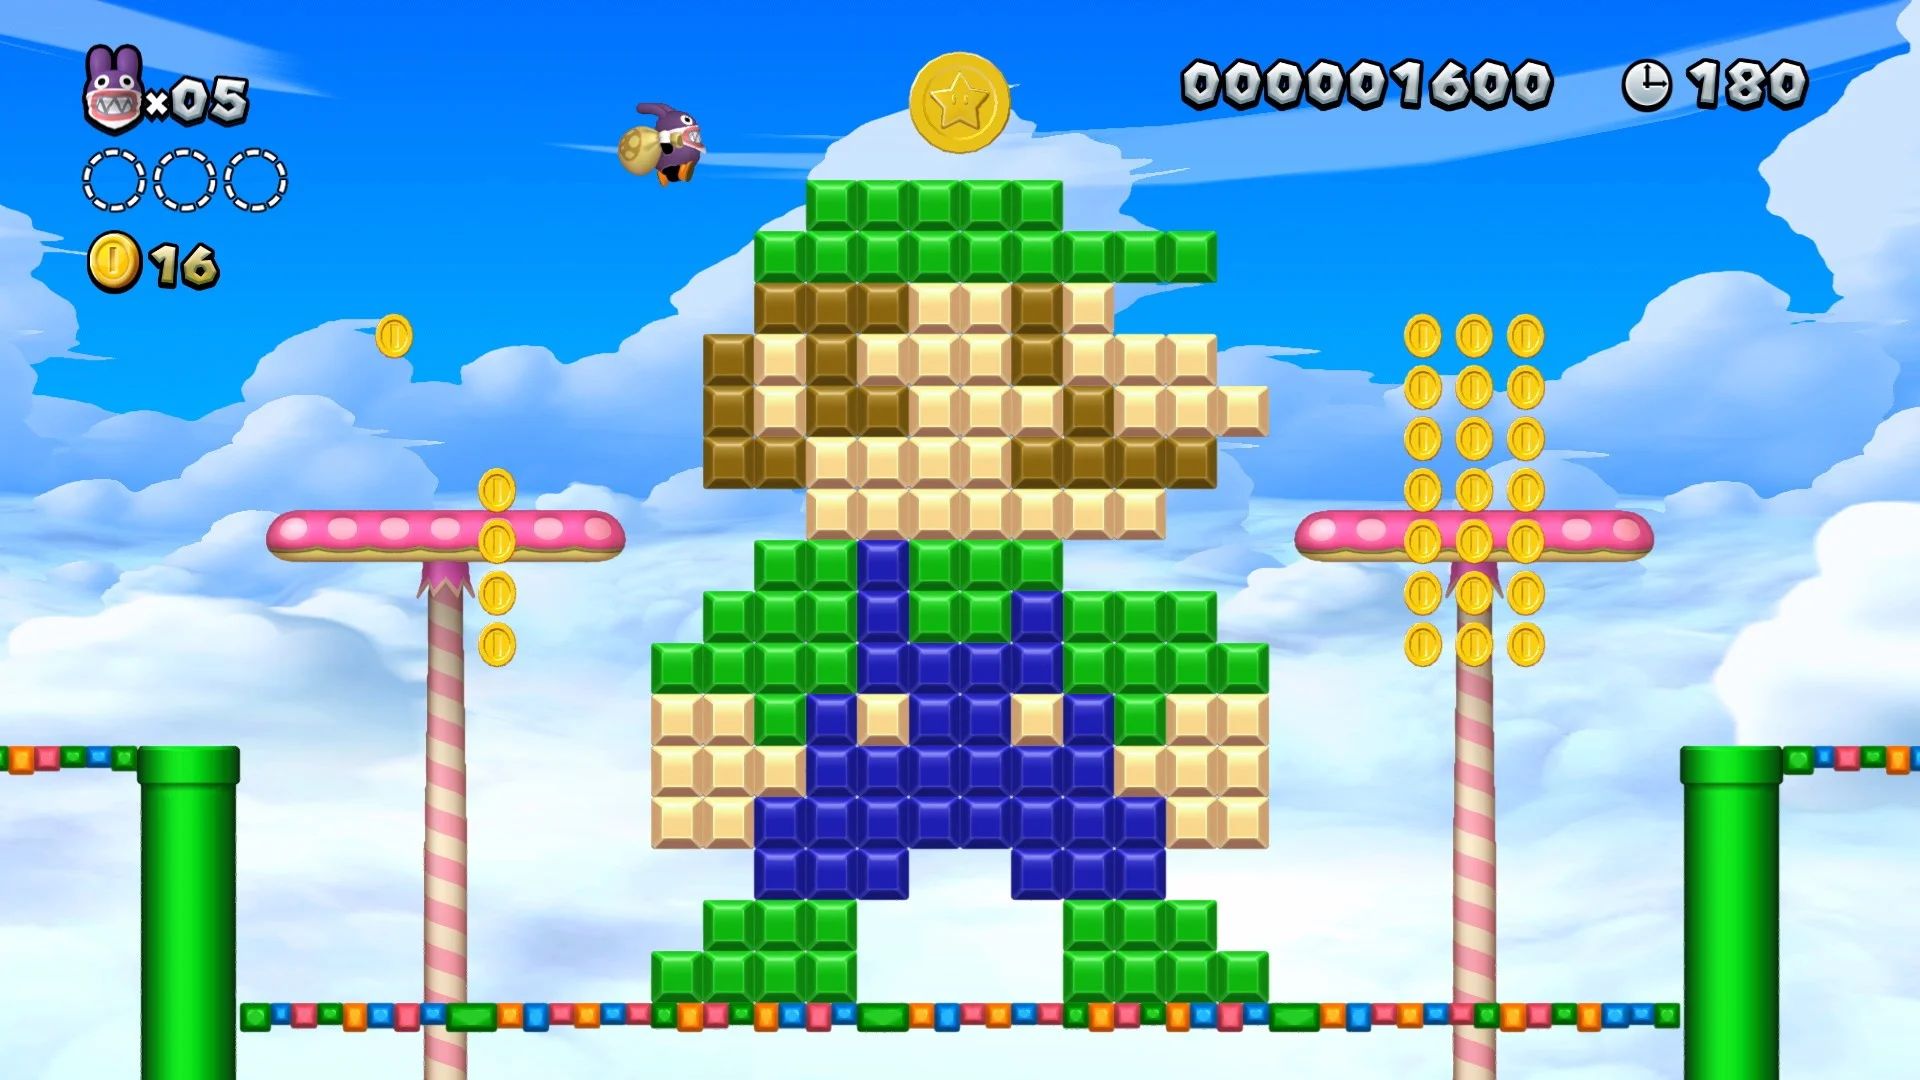 A monument to the Mushroom Kingdom's true leader, Luigi.